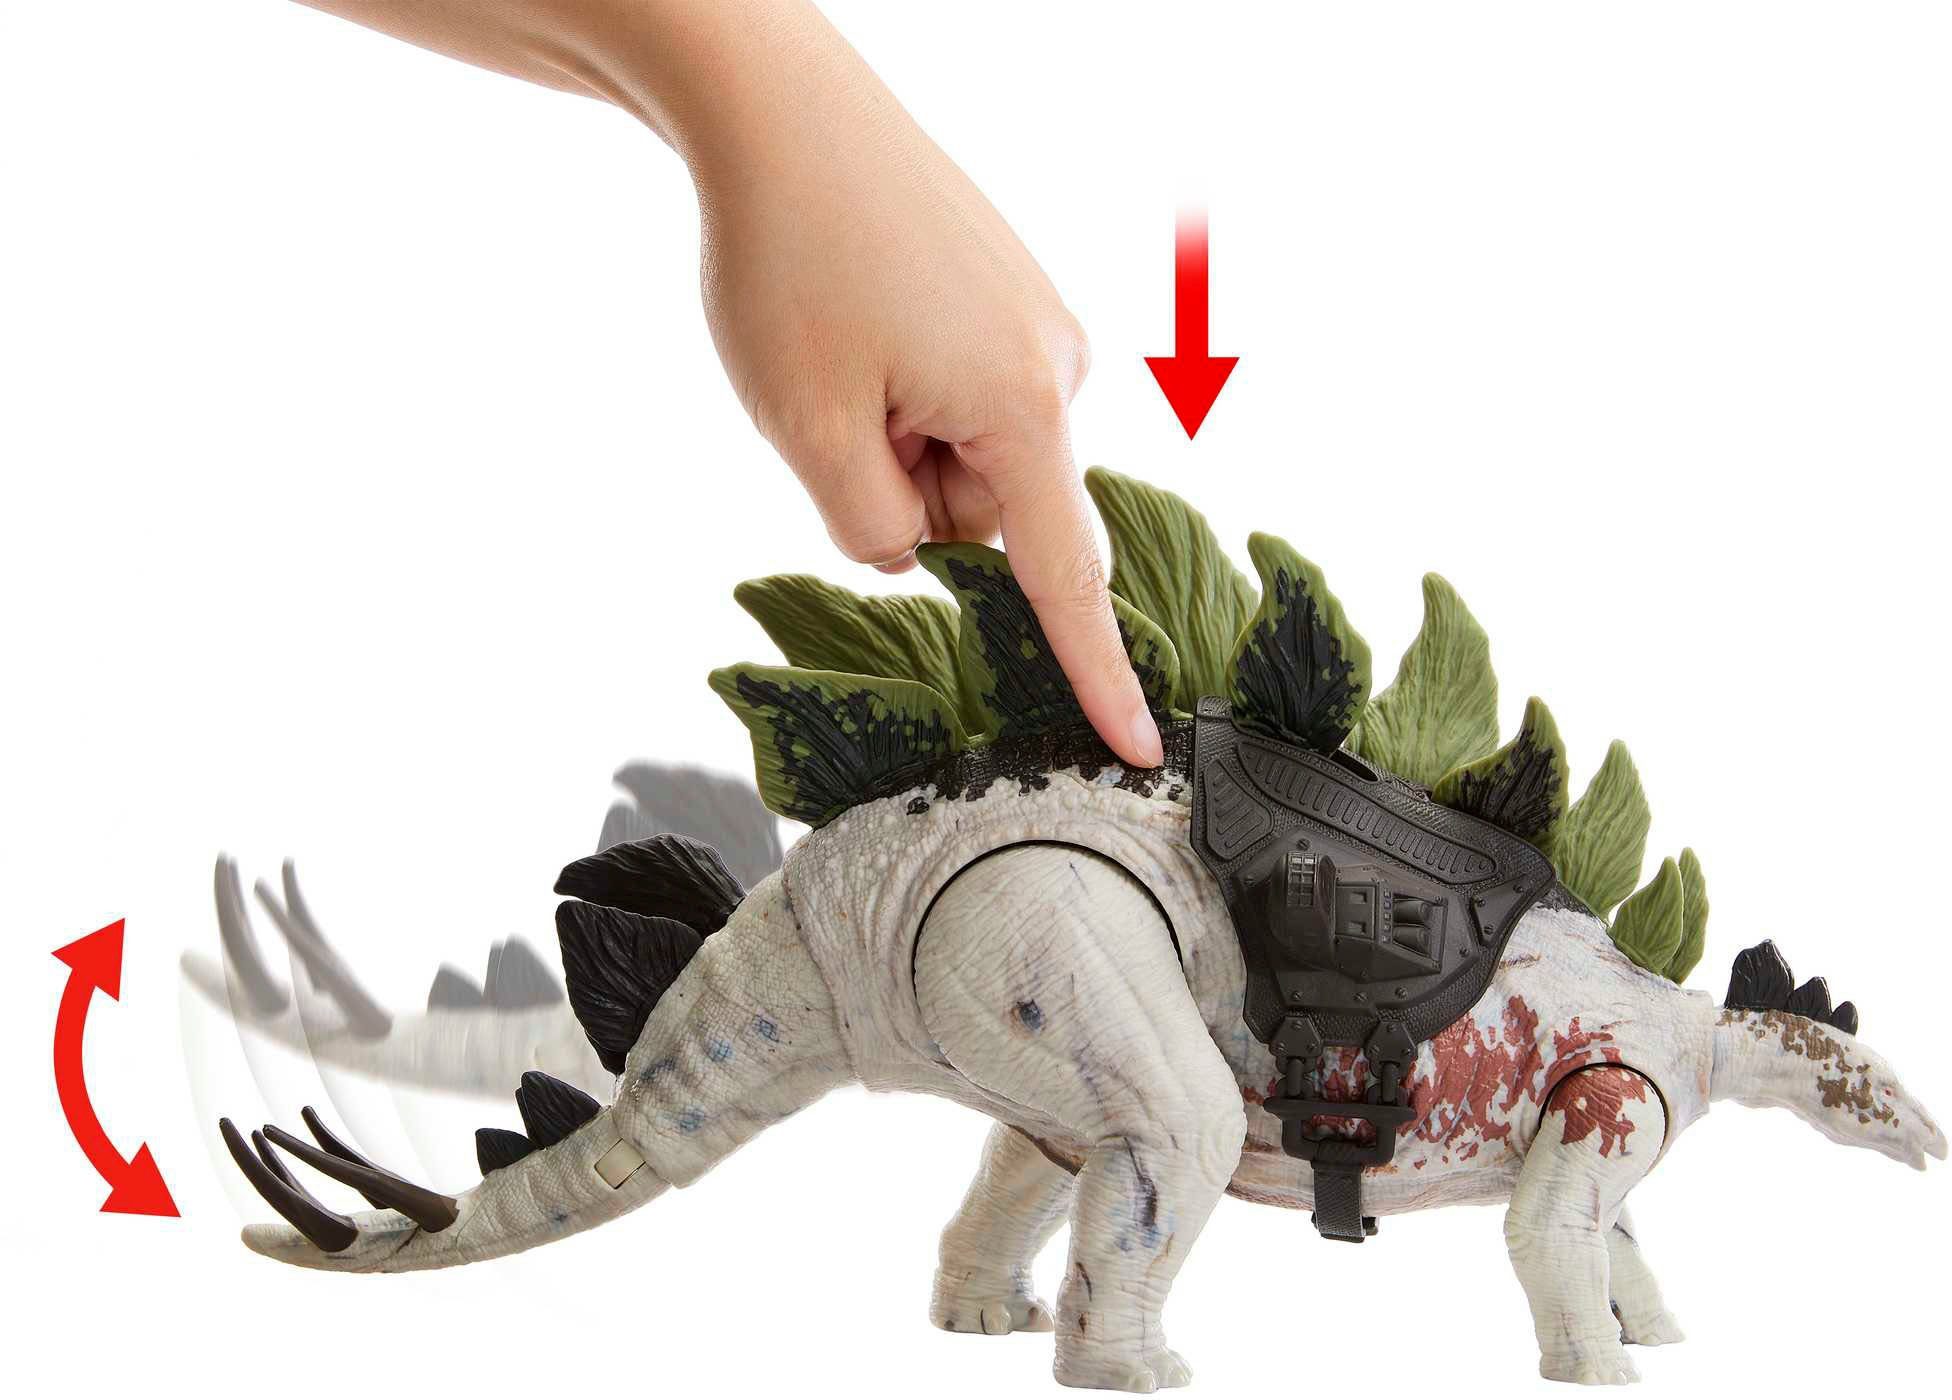 Trackers - Jurassic New World Actionfigur Stegosaurus Large Mattel®